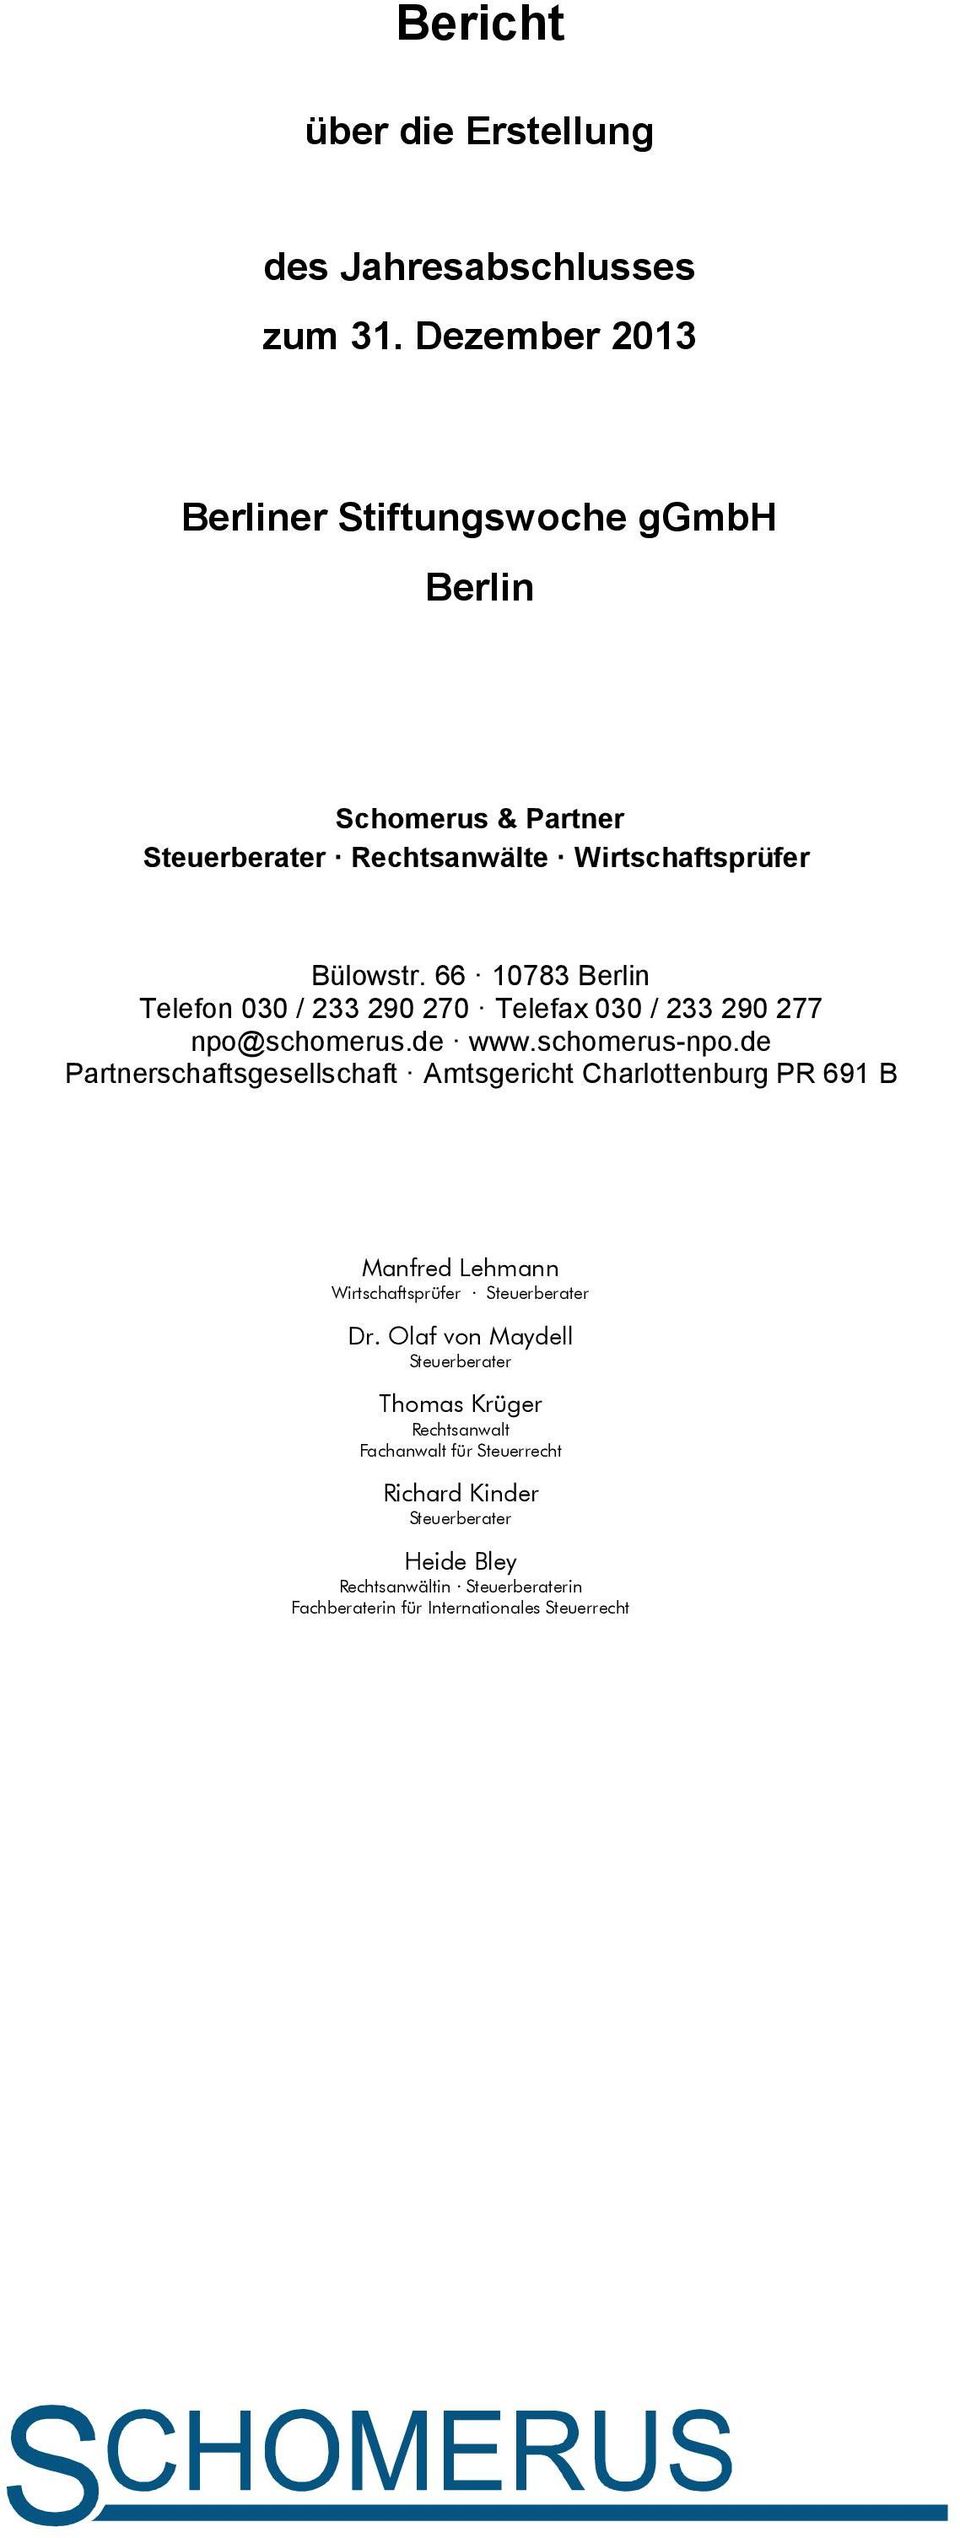 66 10783 Berlin Telefon 030 / 233 290 270 Telefax 030 / 233 290 277 npo@schomerus.de www.schomerus-npo.